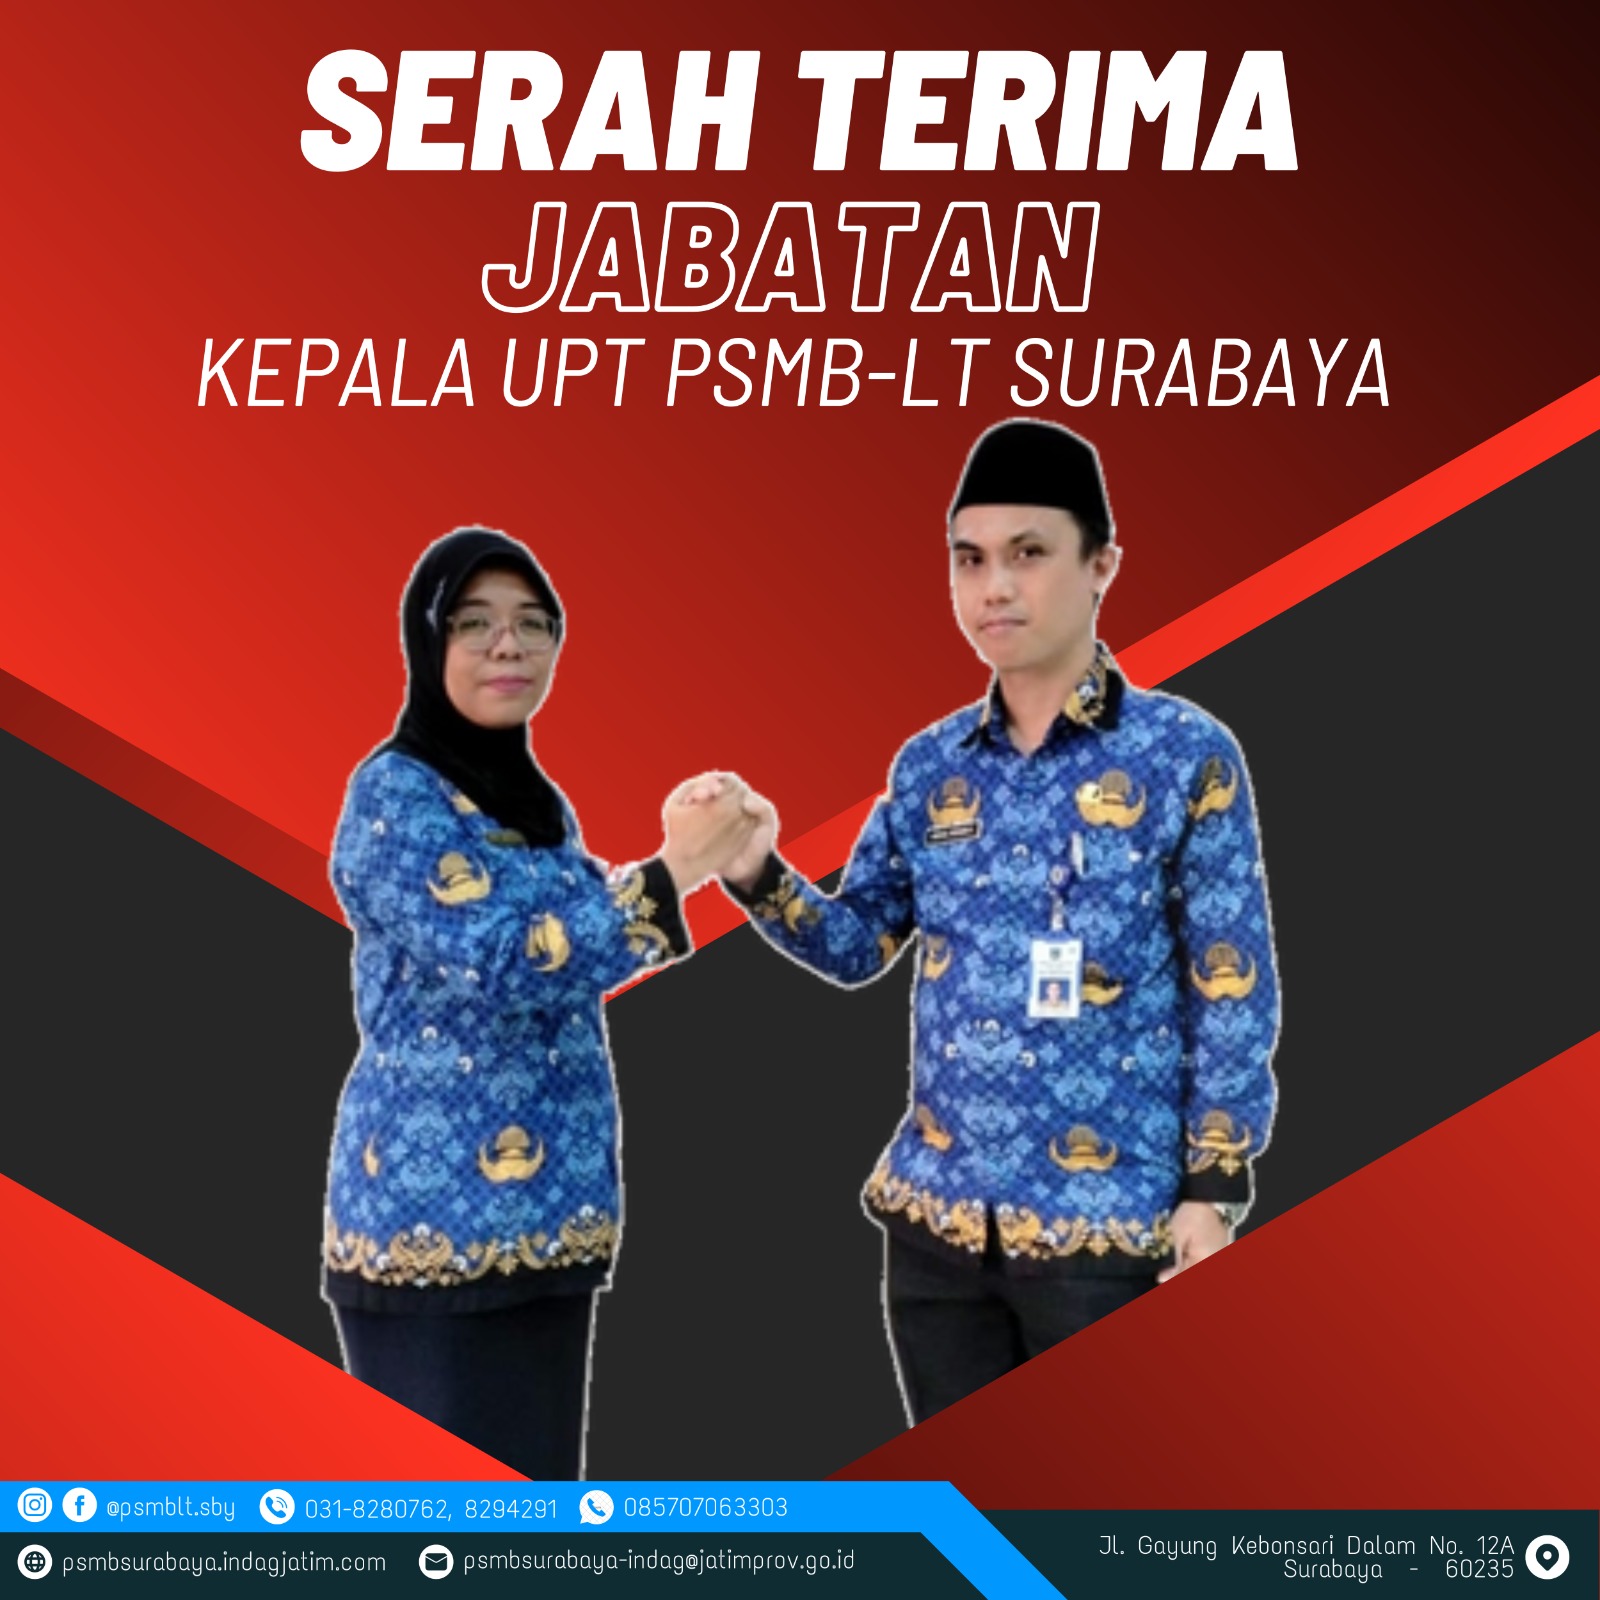 Serah Terima Jawabatan kepala UPT PSMB-LT Surabaya